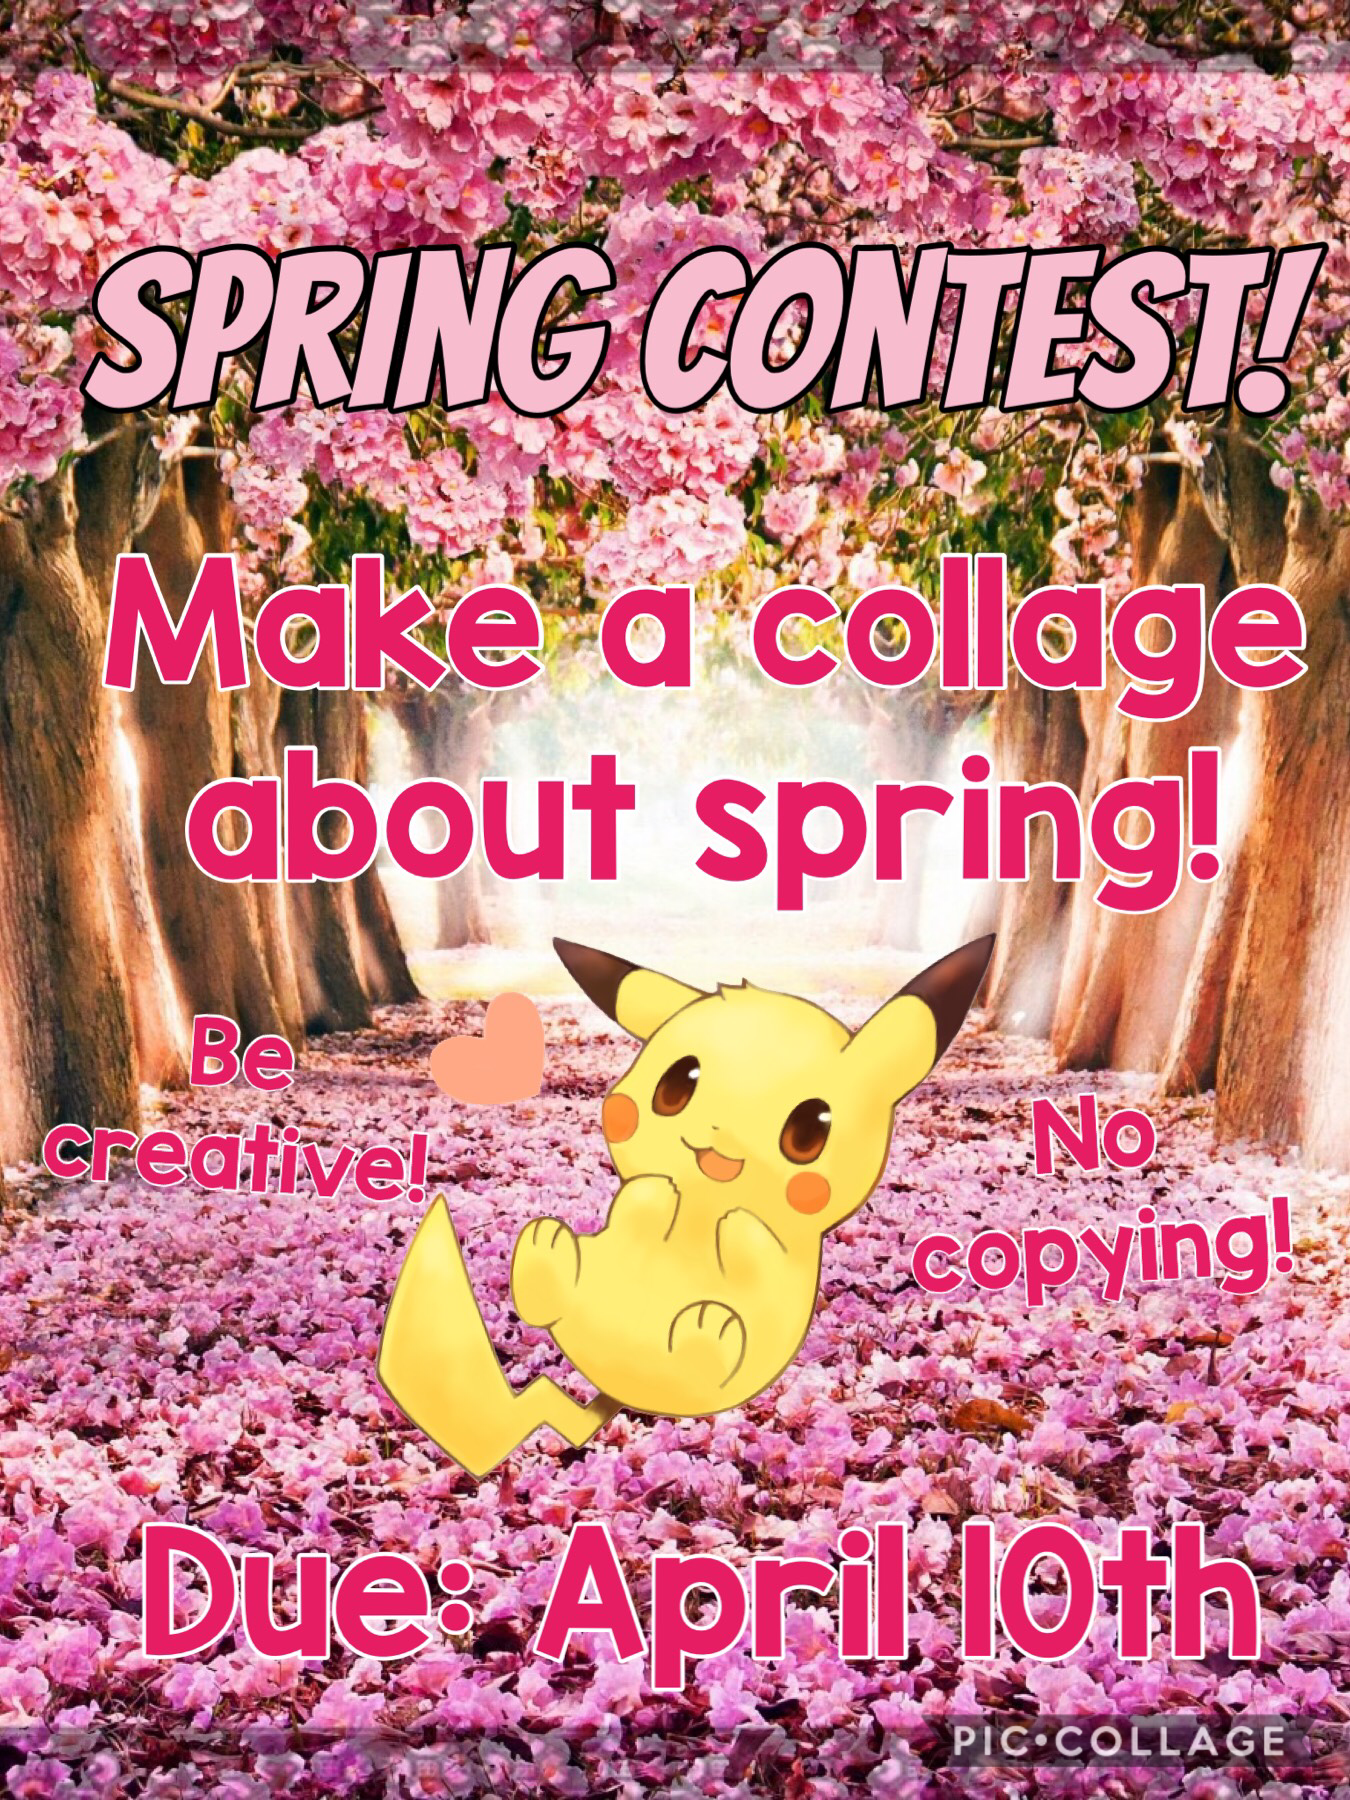 I’m holding a spring contest!